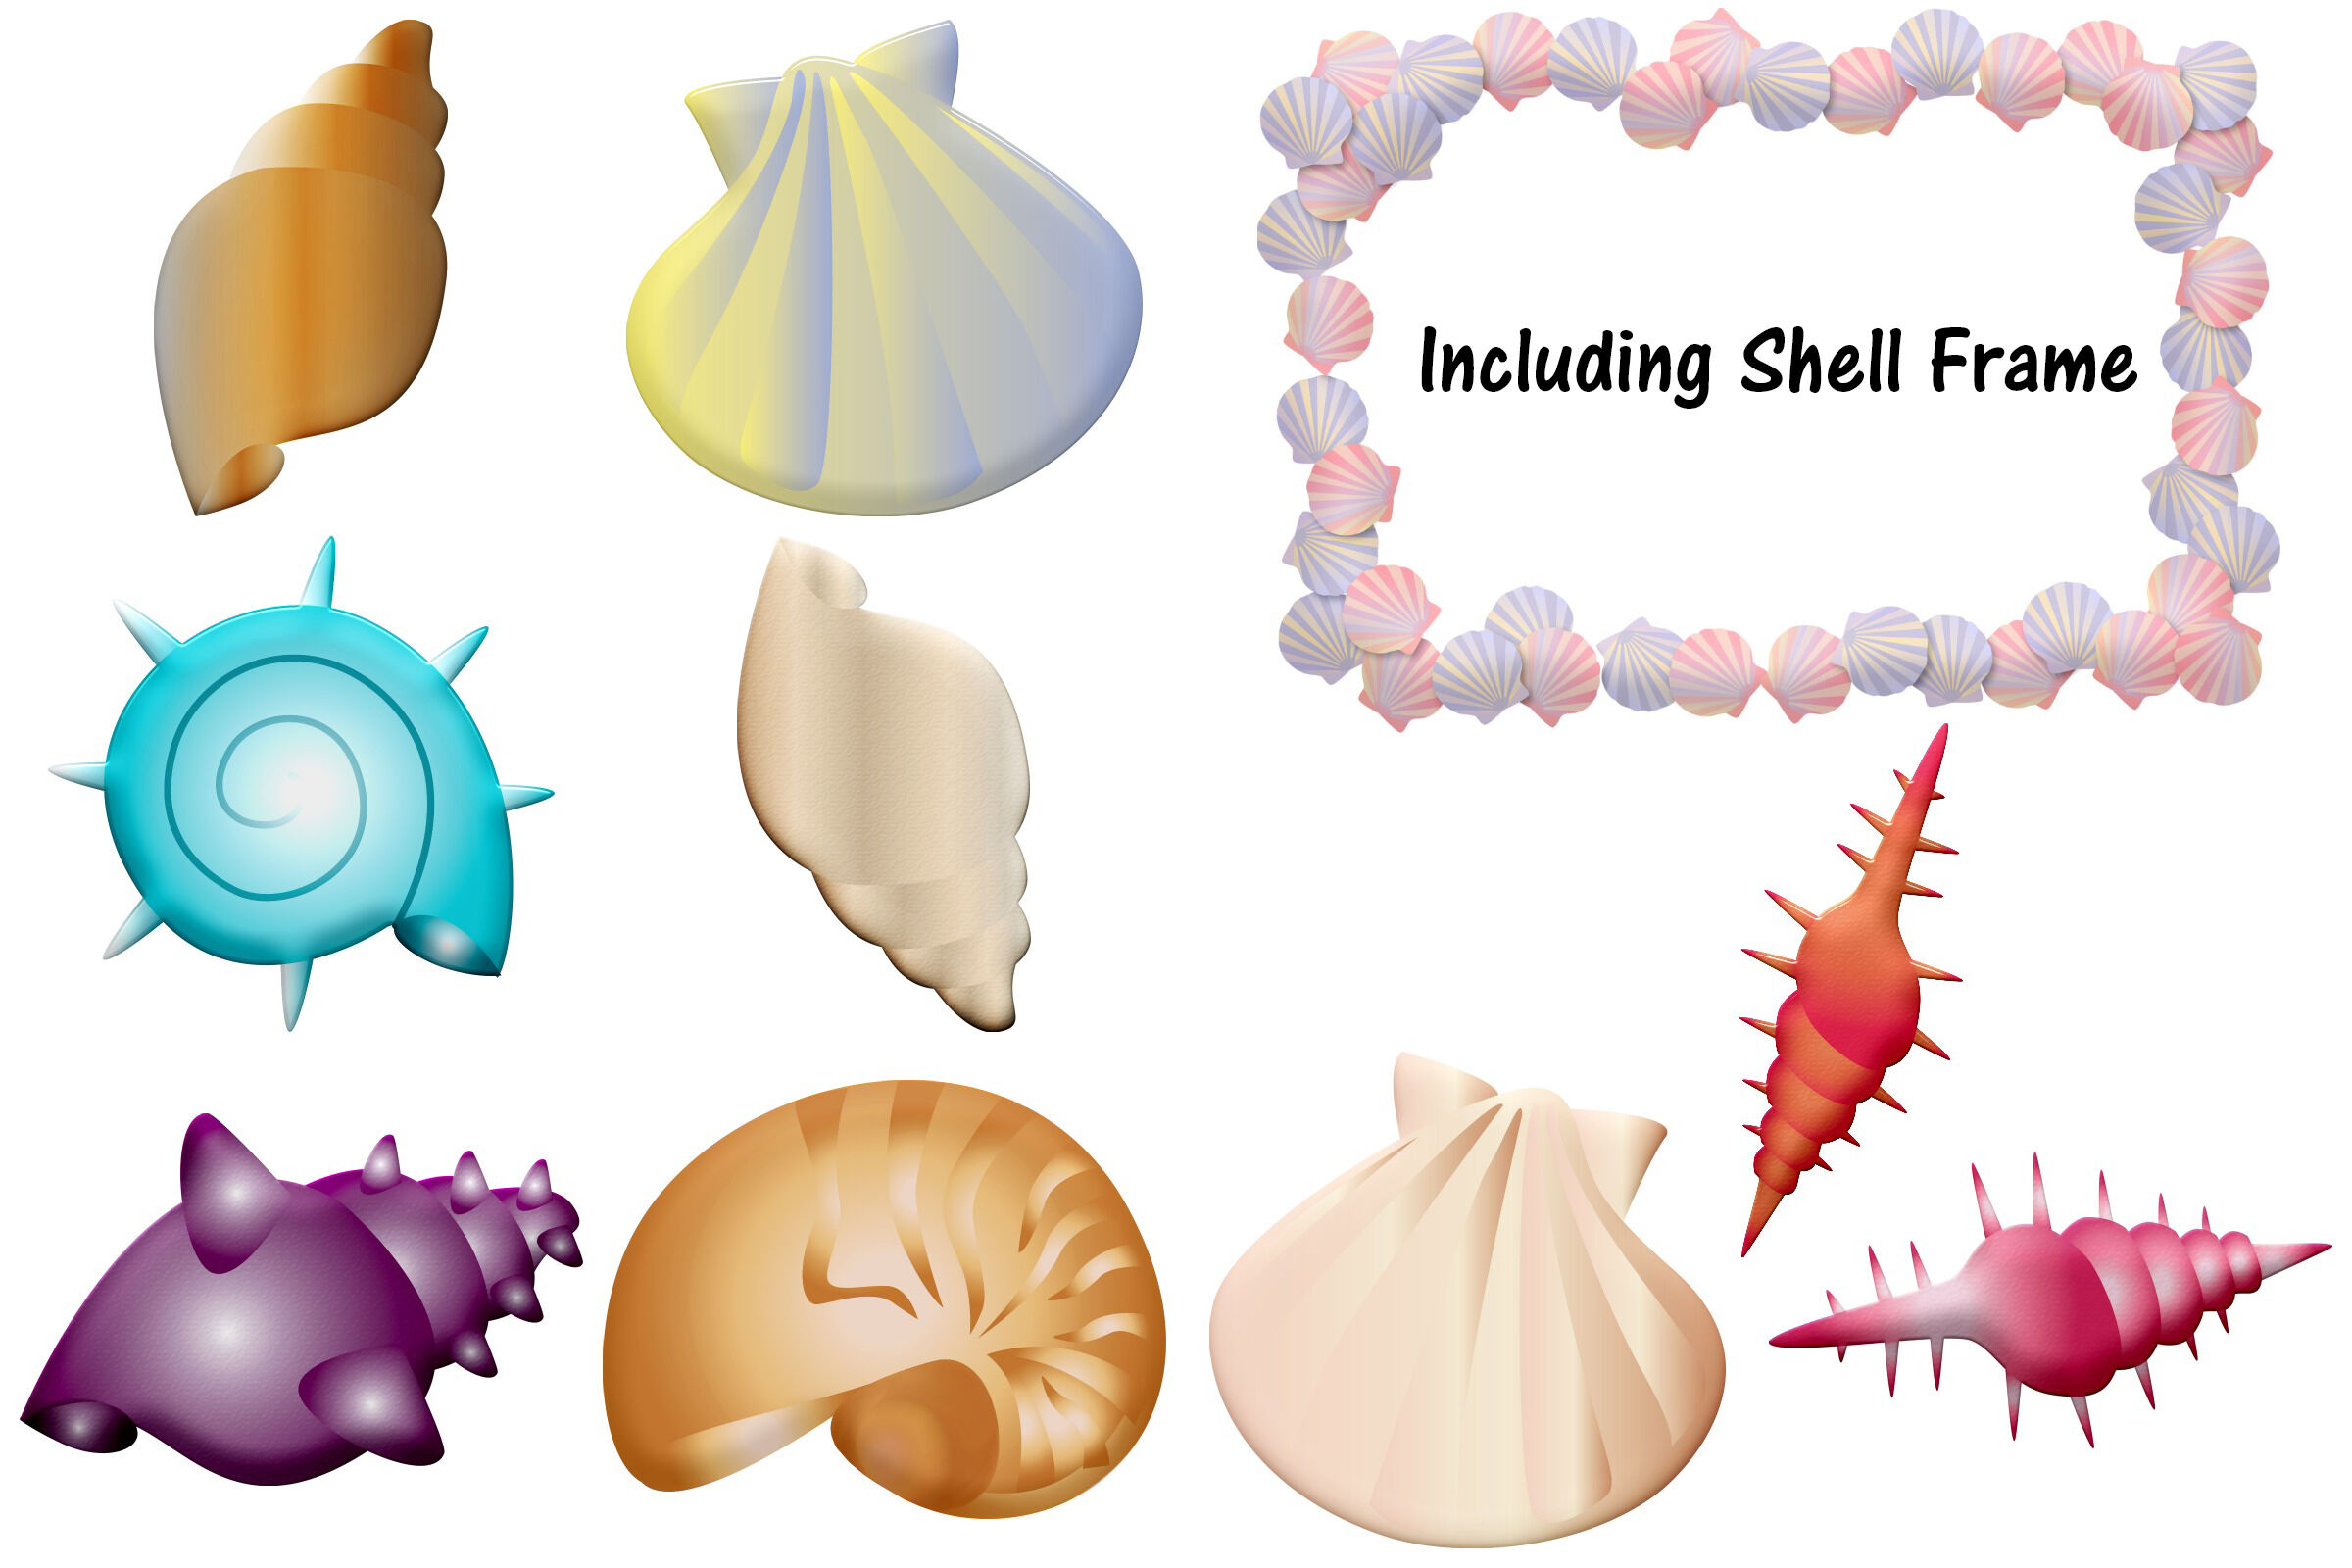 Sea Shells Clip Art By Me and Ameliè